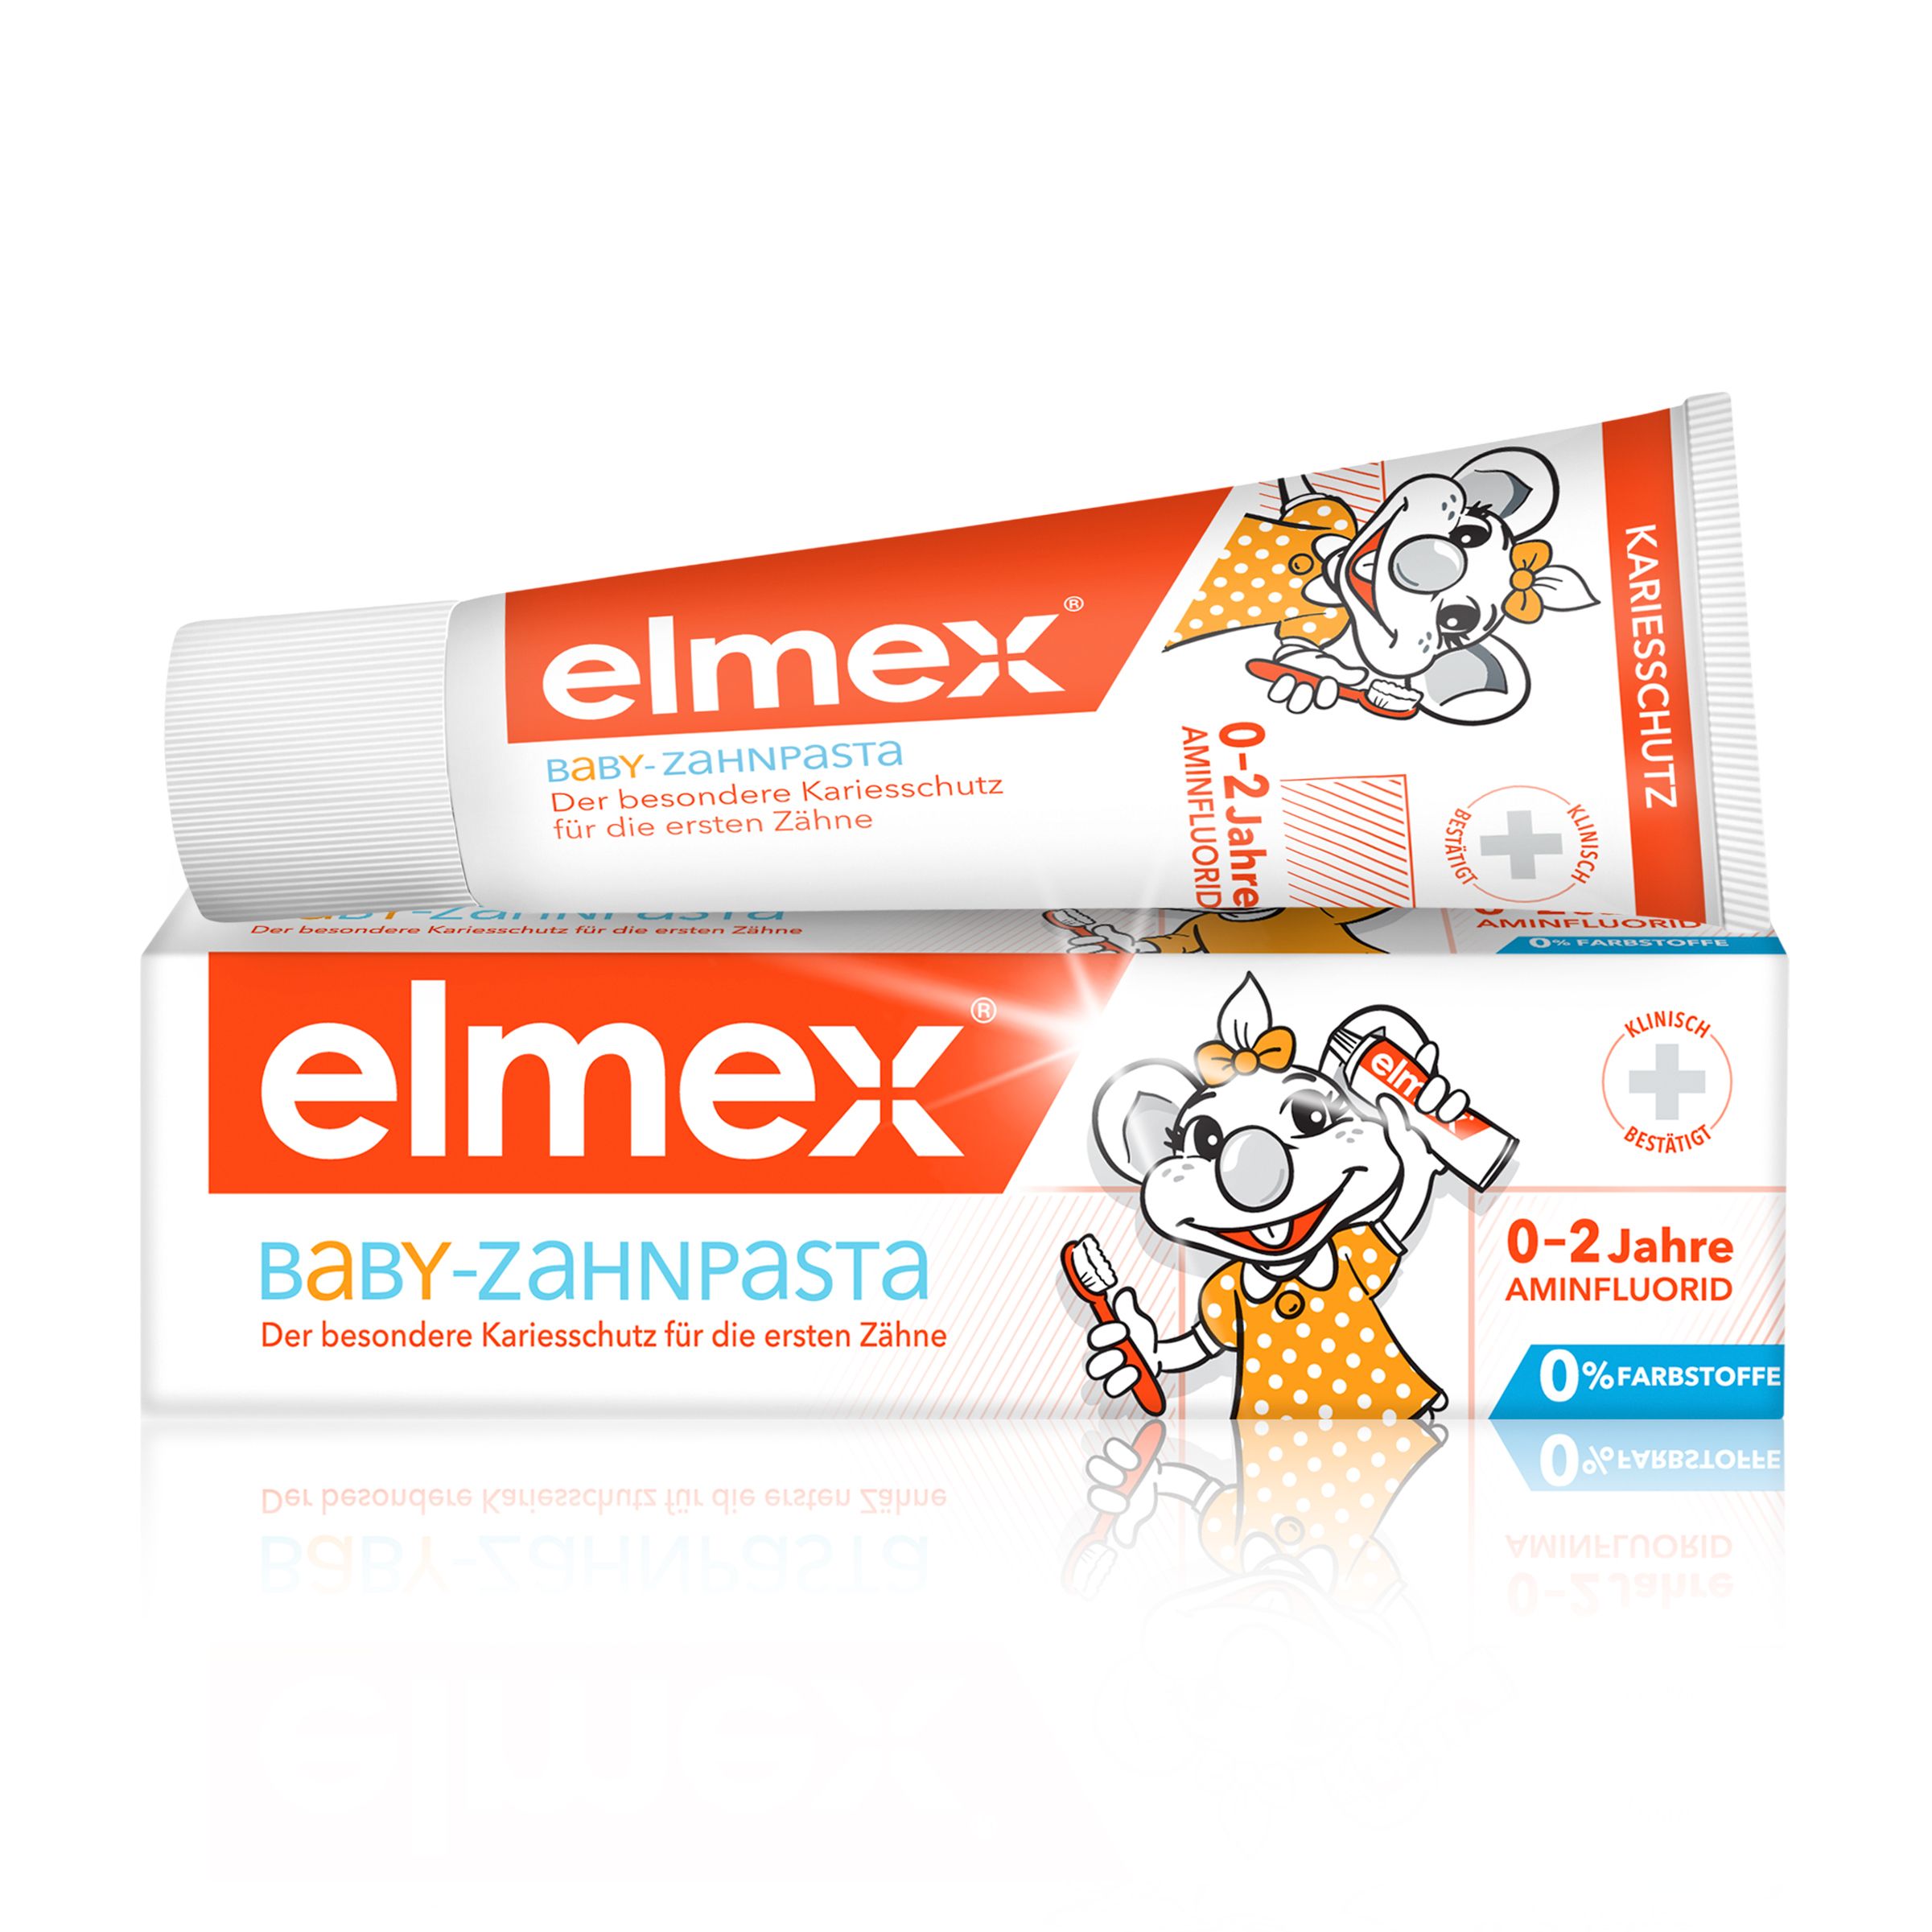 elmex Baby-Zahnpasta